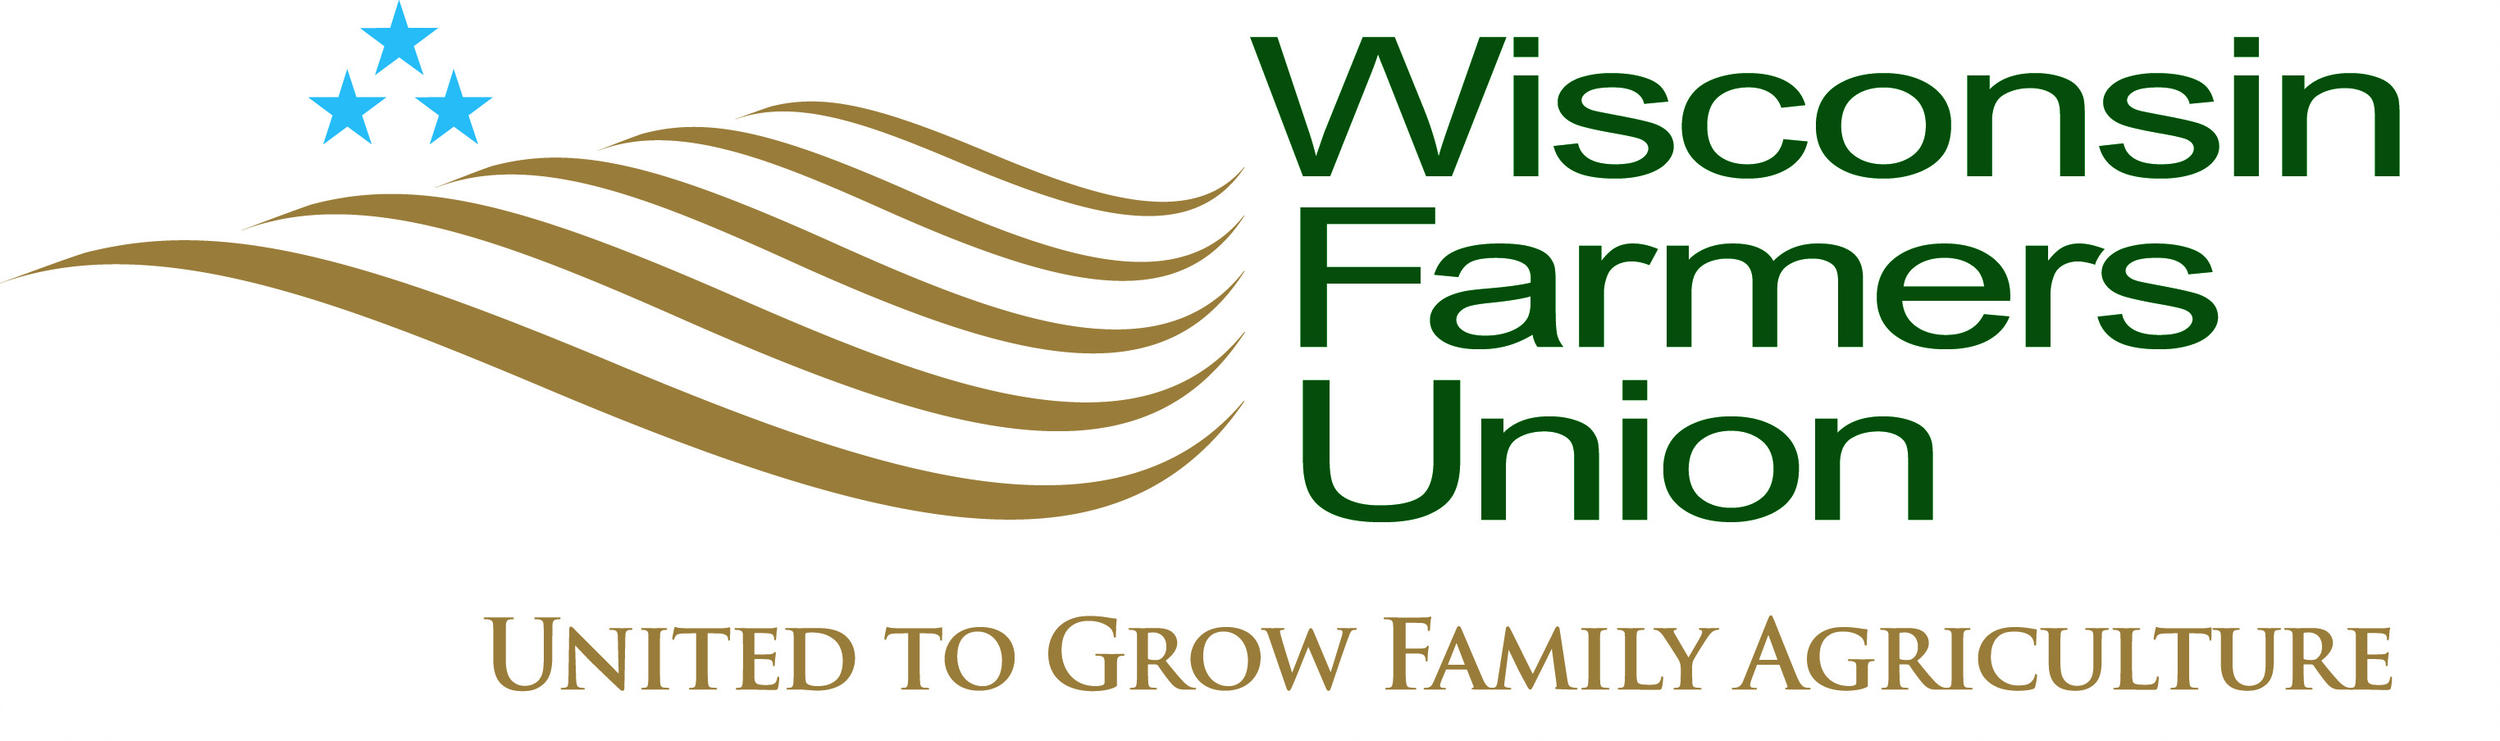 Wisconsin Farmers Union